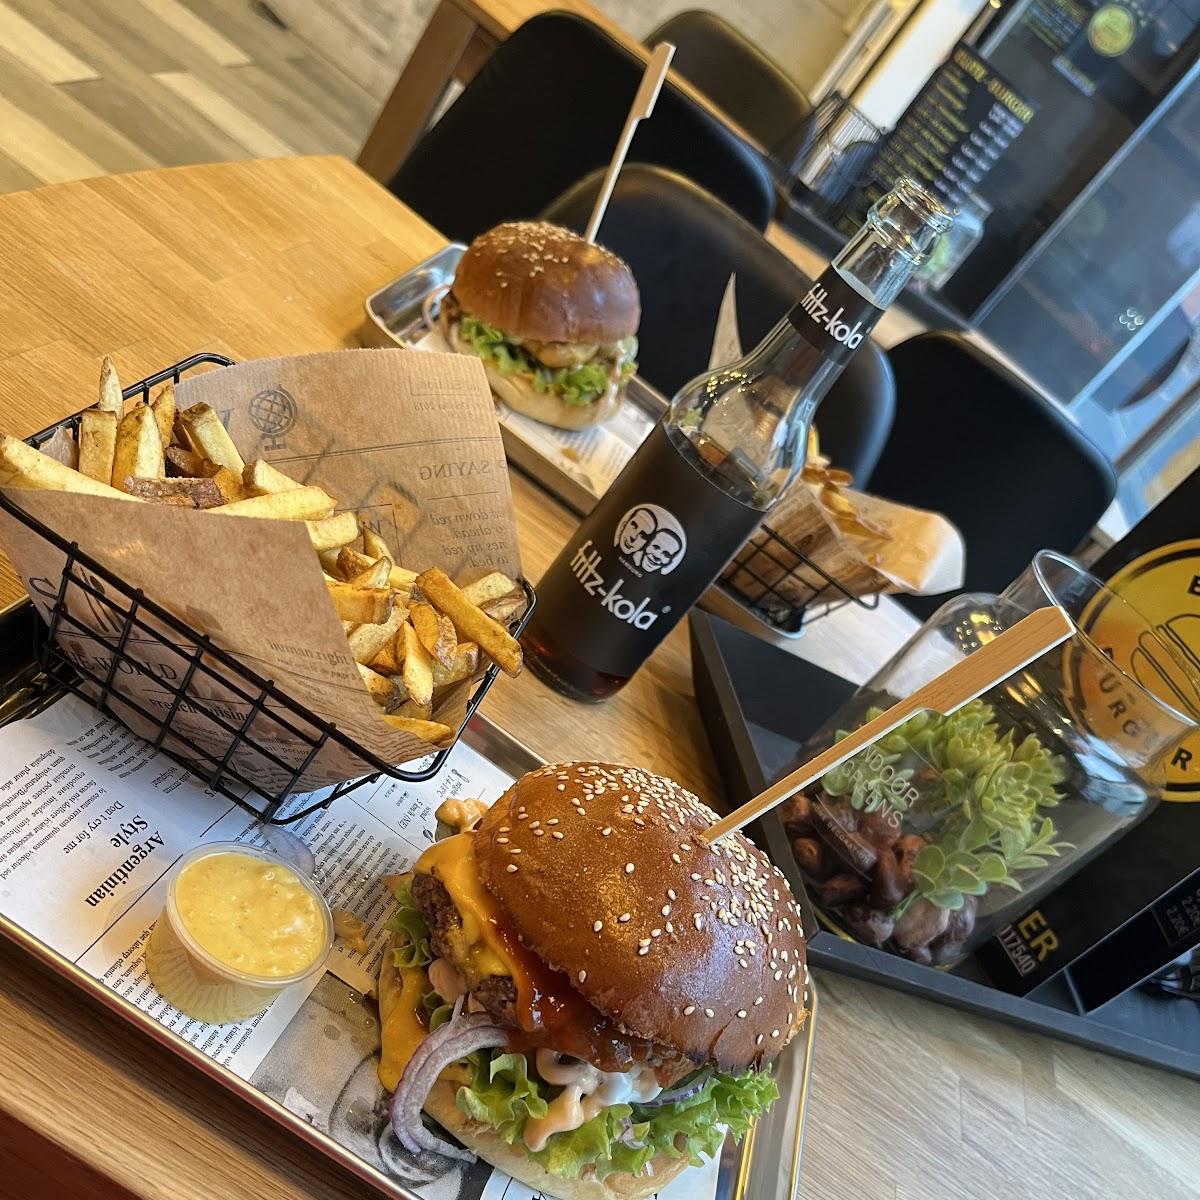 Restaurant "Elite Burger" in Langerwehe